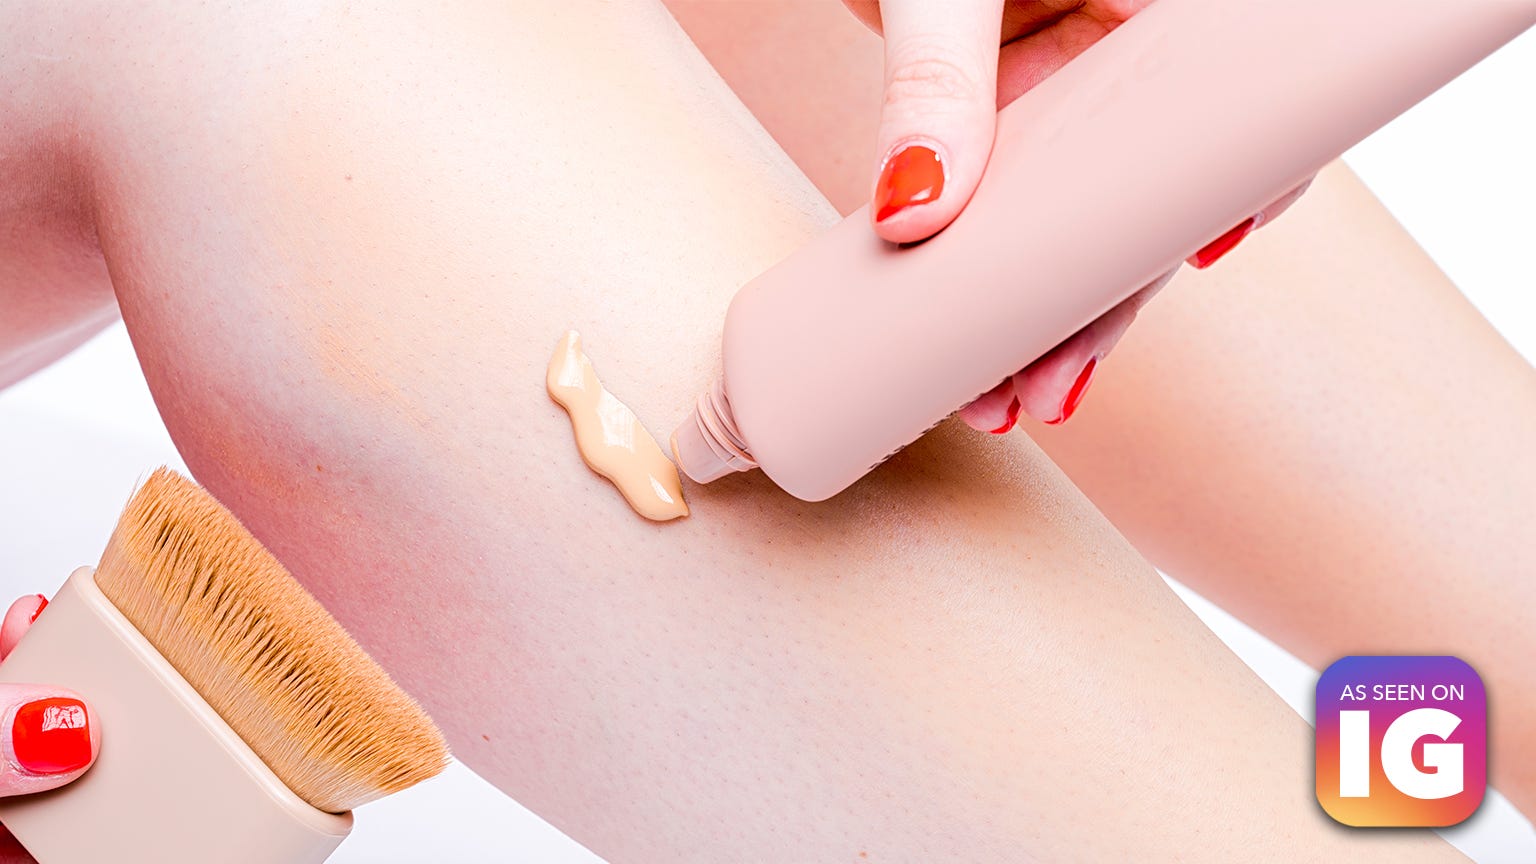 Body Makeup Reviews, Leg Makeup for Sexy Legs